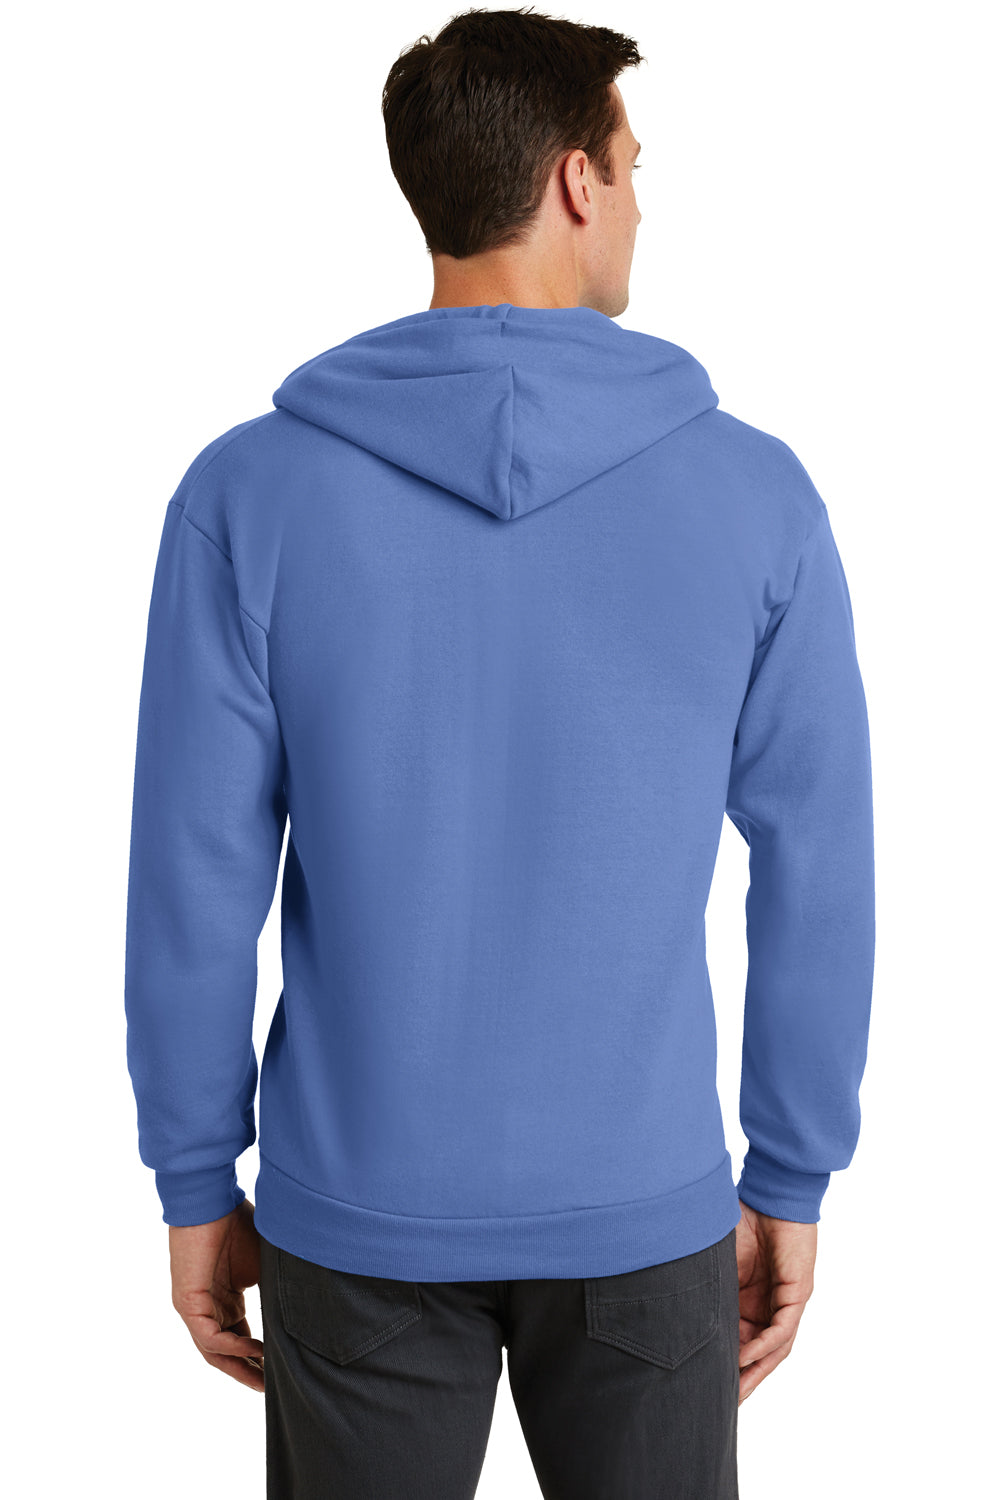 Port & Company PC78ZH Mens Core Fleece Full Zip Hooded Sweatshirt Hoodie Carolina Blue Back